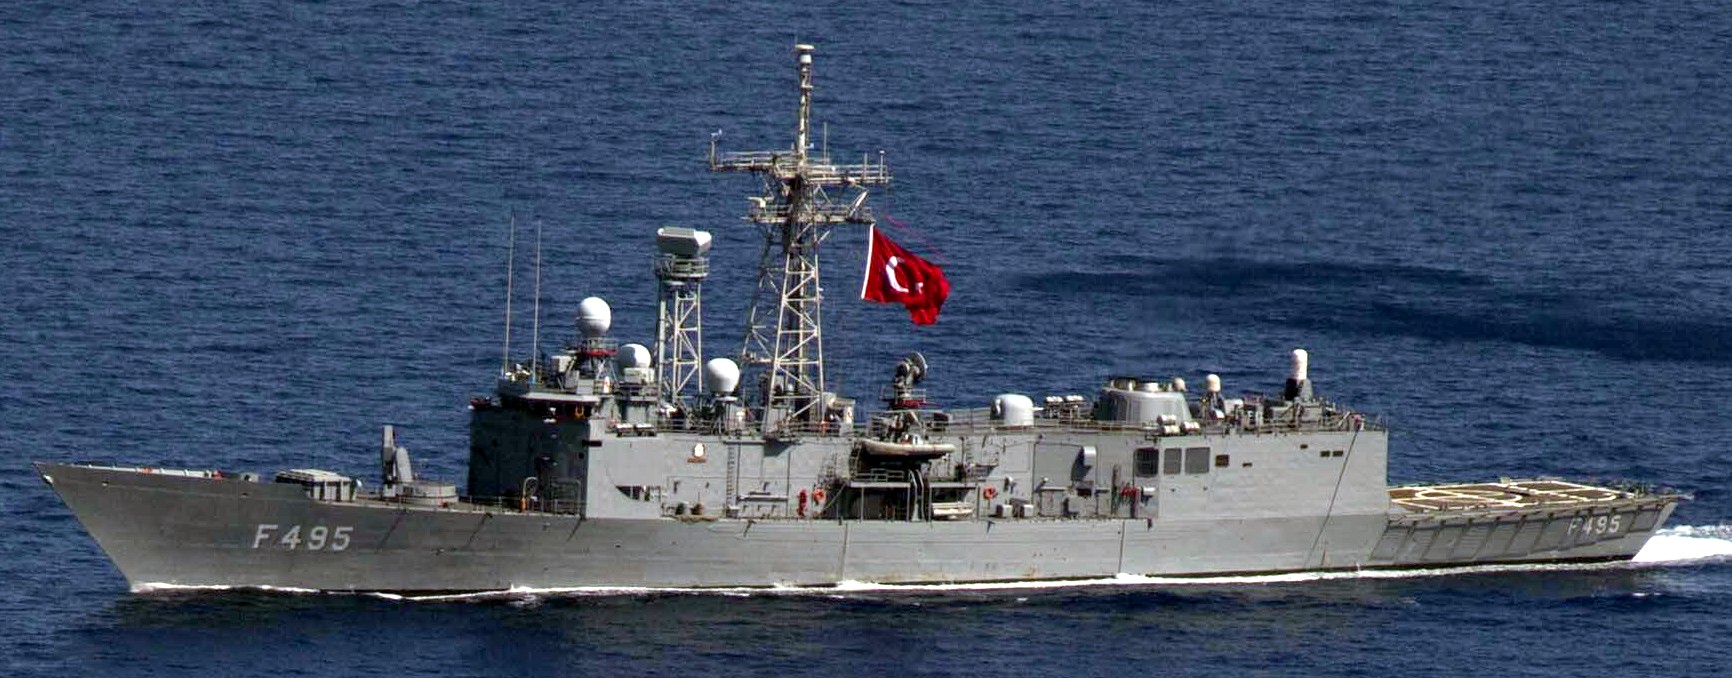 f-495 tcg gediz gabya g-class perry frigate ffg turkish navy türk deniz kuvvetleri 05